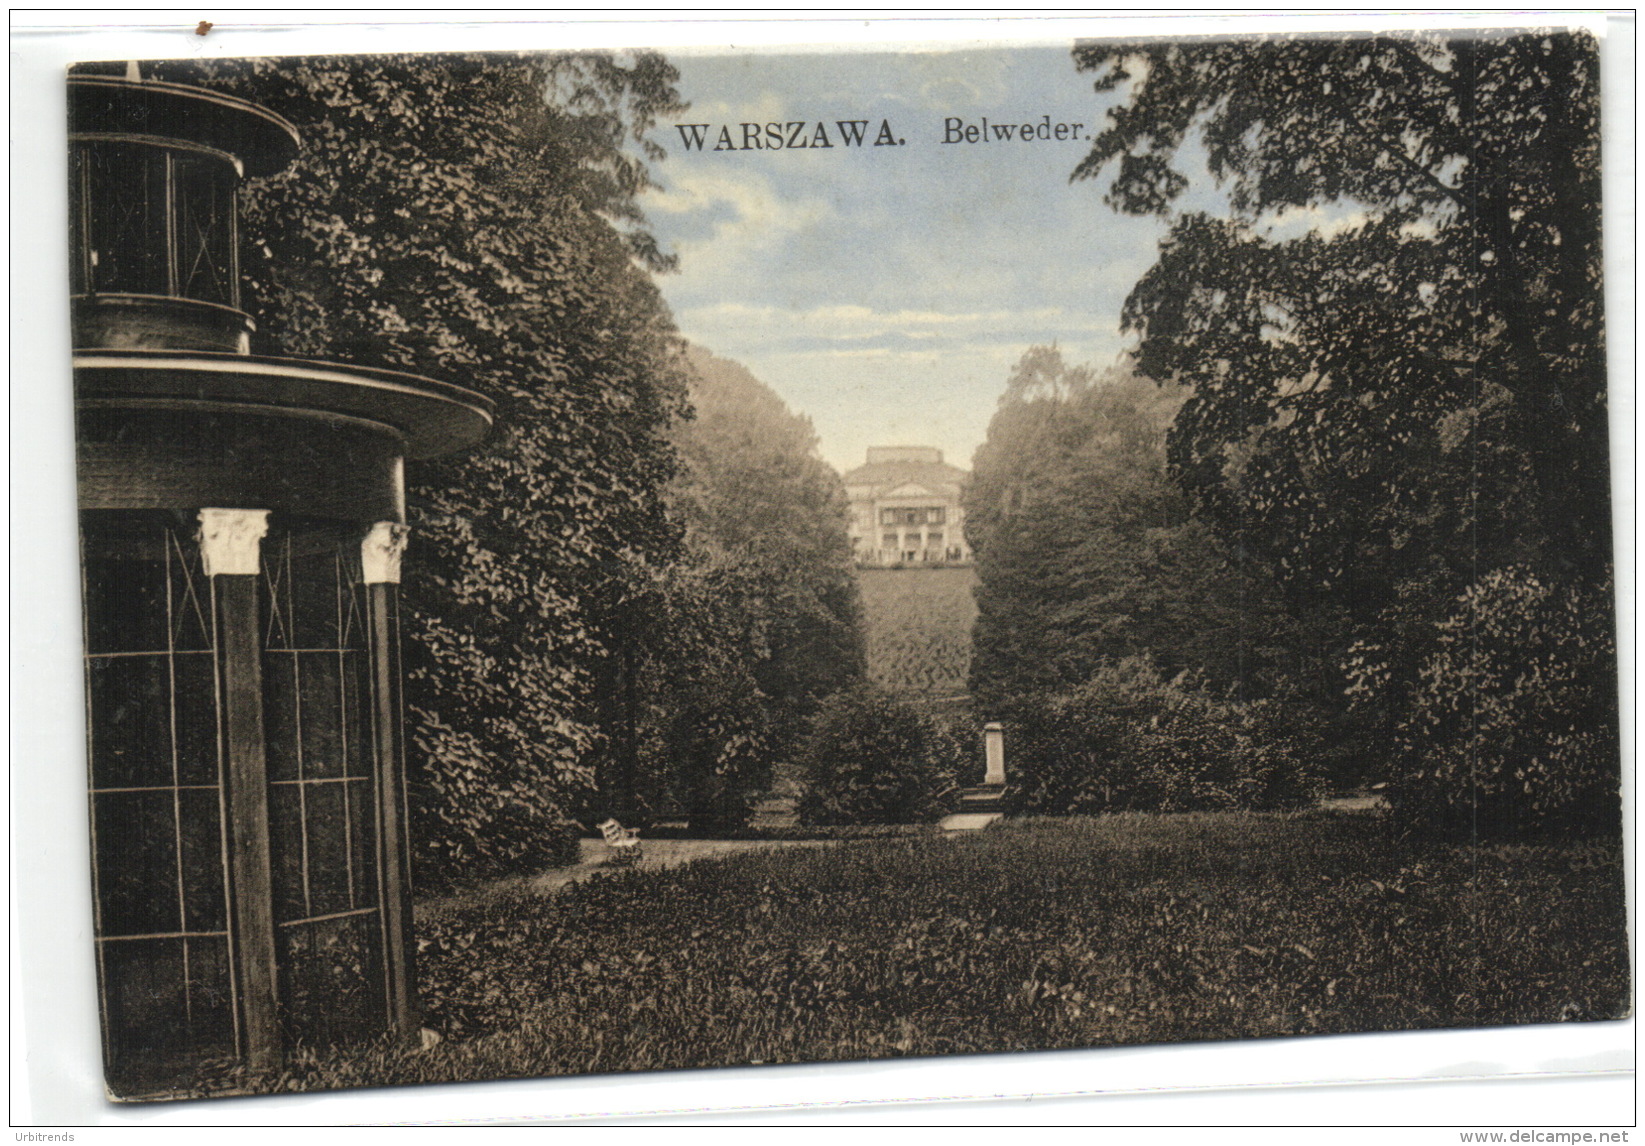 1 Postcard Warsaw Warszawa Belweder - Poland